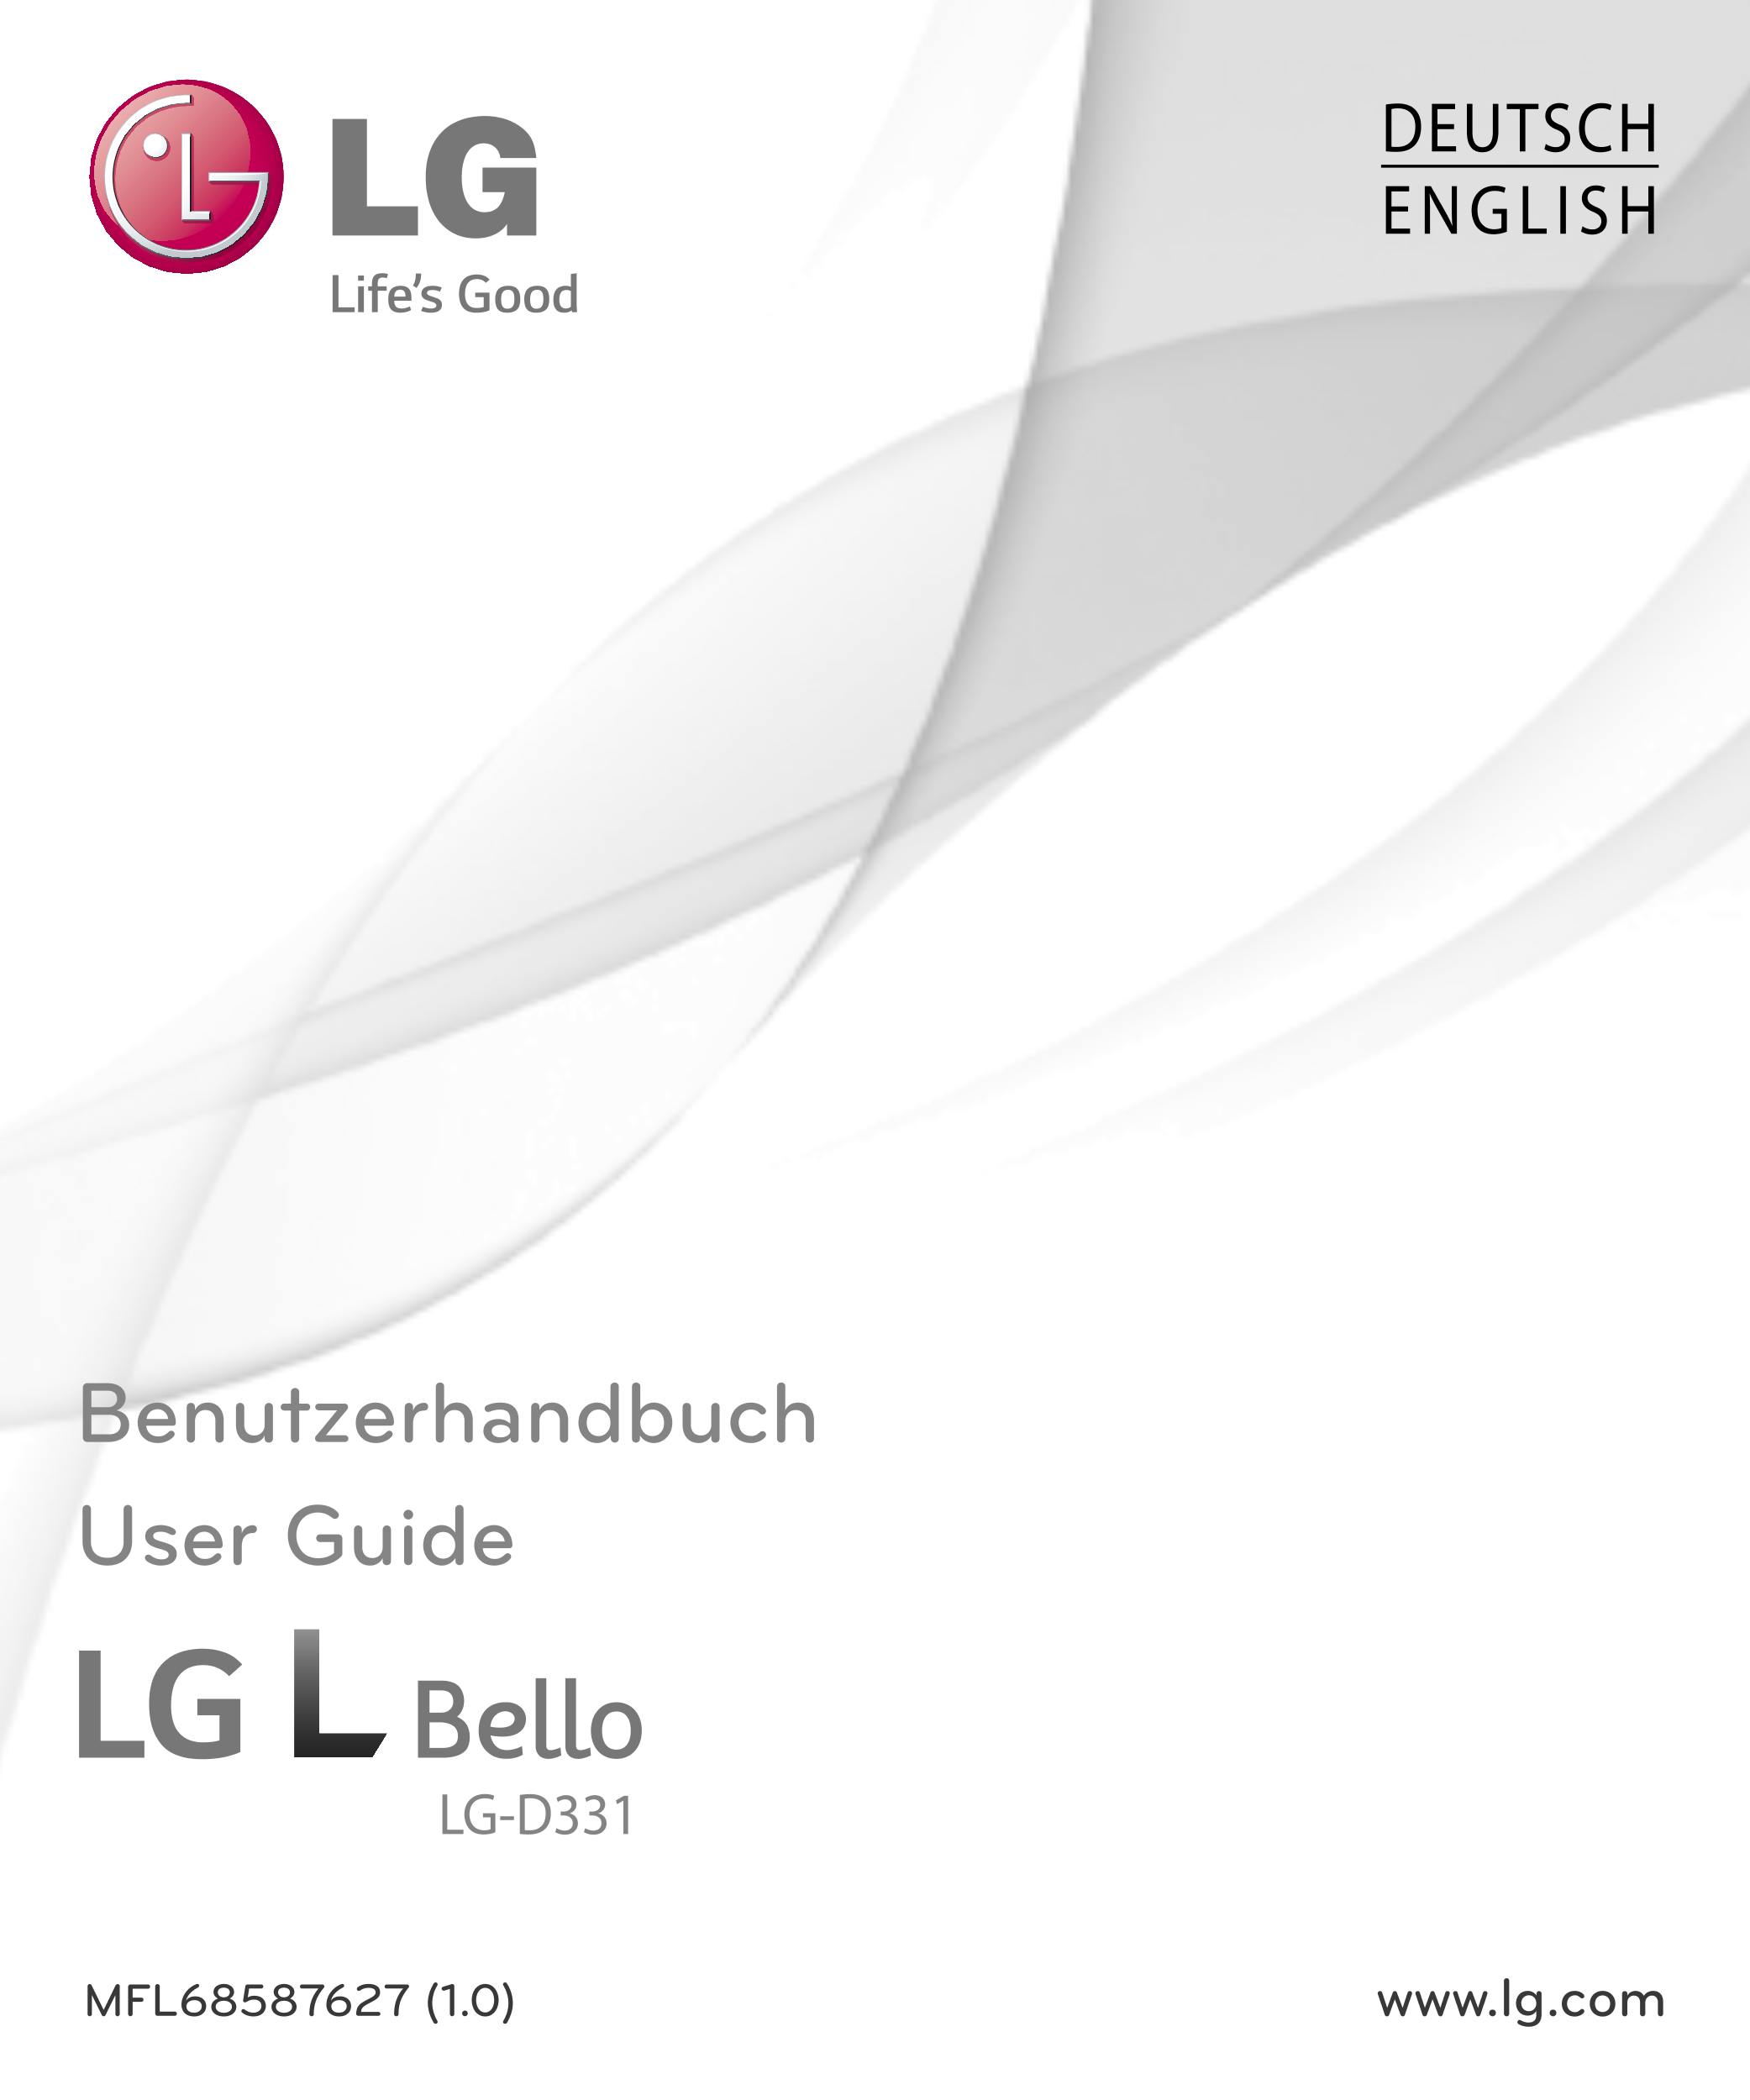 DEUTSCH
ENGLISH
Benutzerhandbuch
User Guide
LG-D331
MFL68587627 (1.0)  www.lg.com